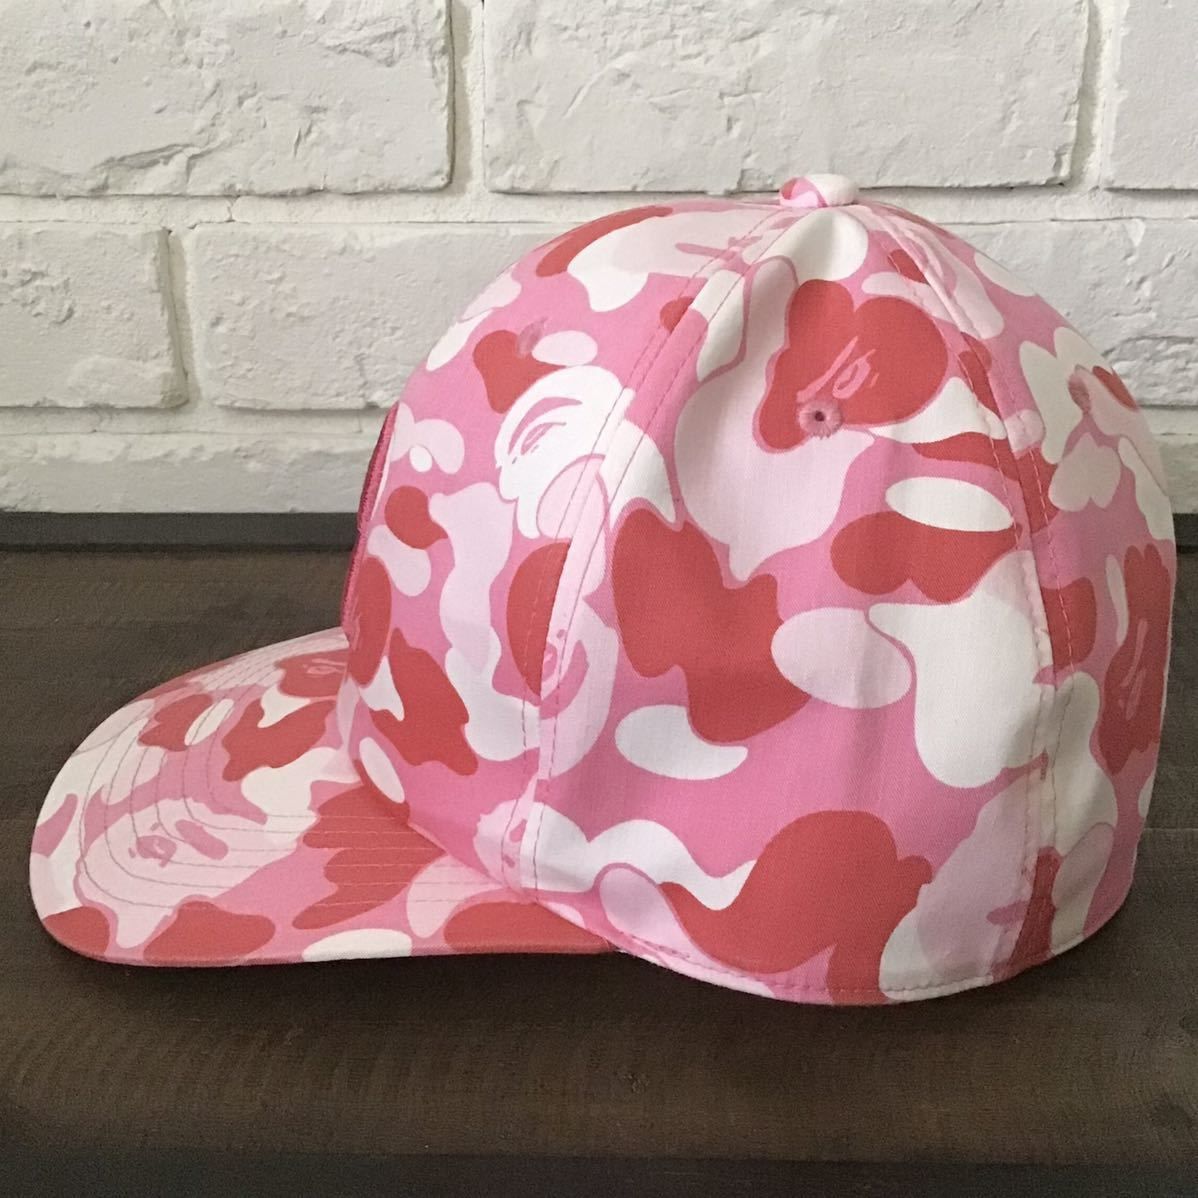 ABC camo pink キャップ a bathing ape BAPE ABCカモ ピンク hat cap ...